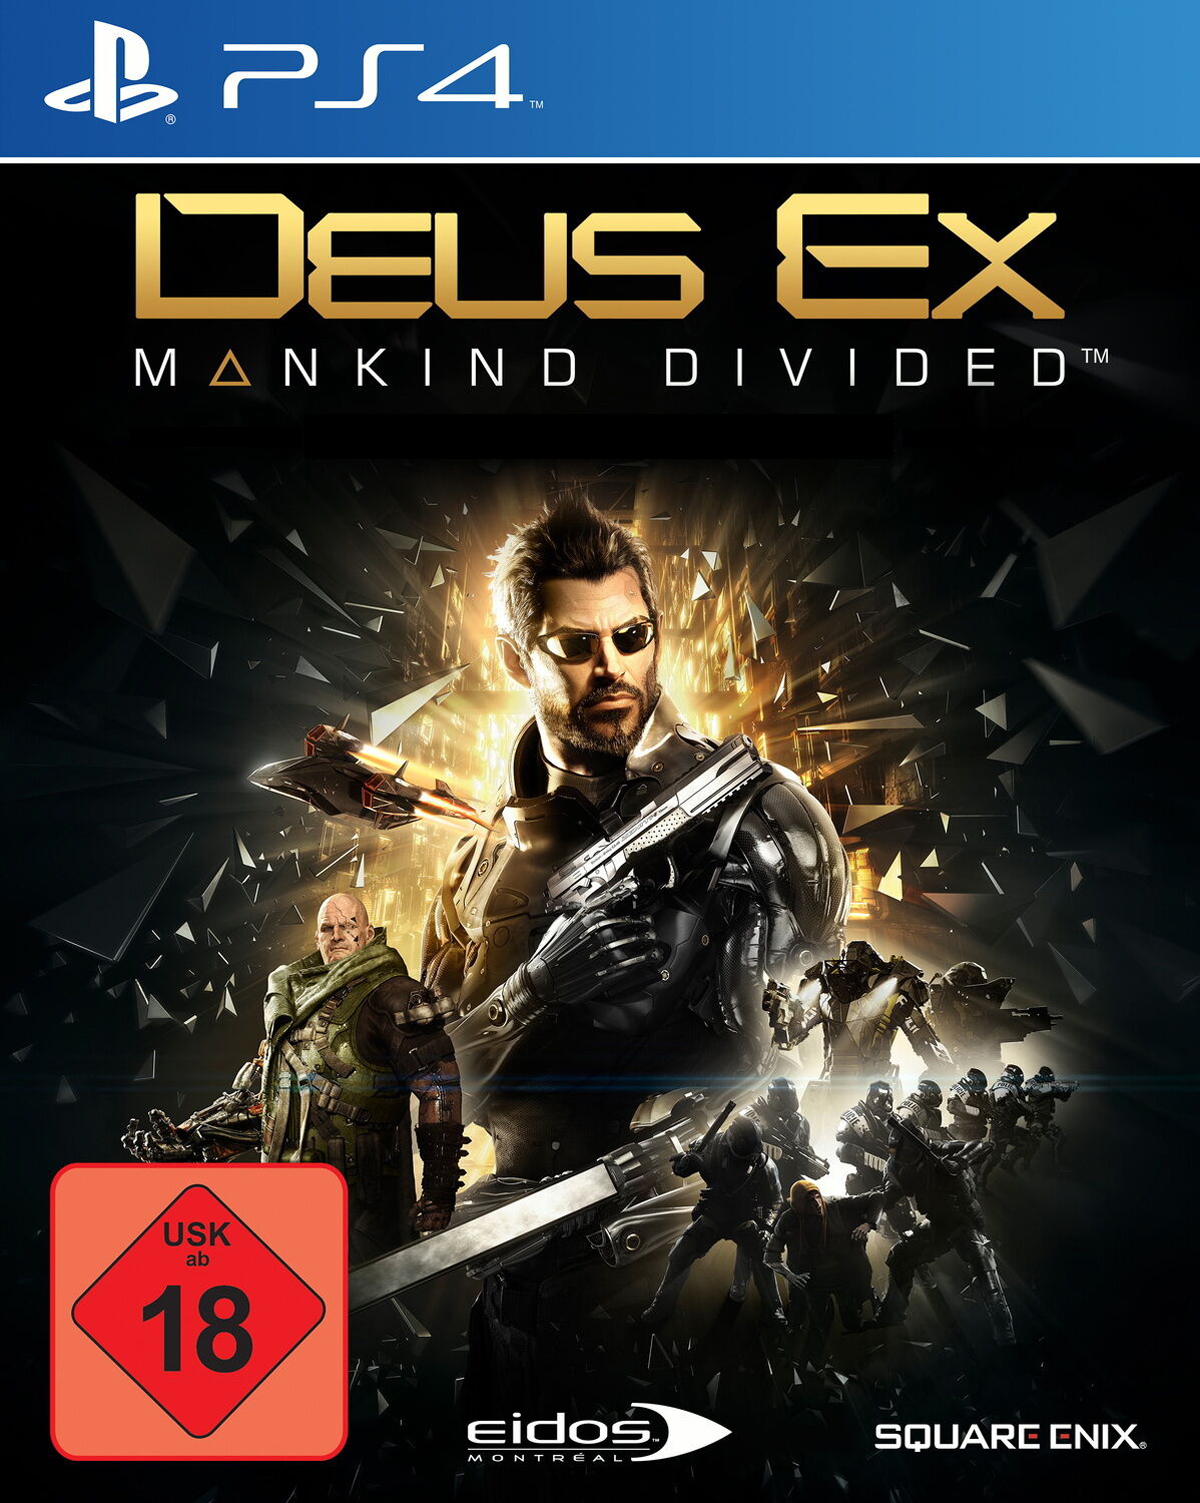 [PlayStation Divided Ex Mankind Deus - - 4]